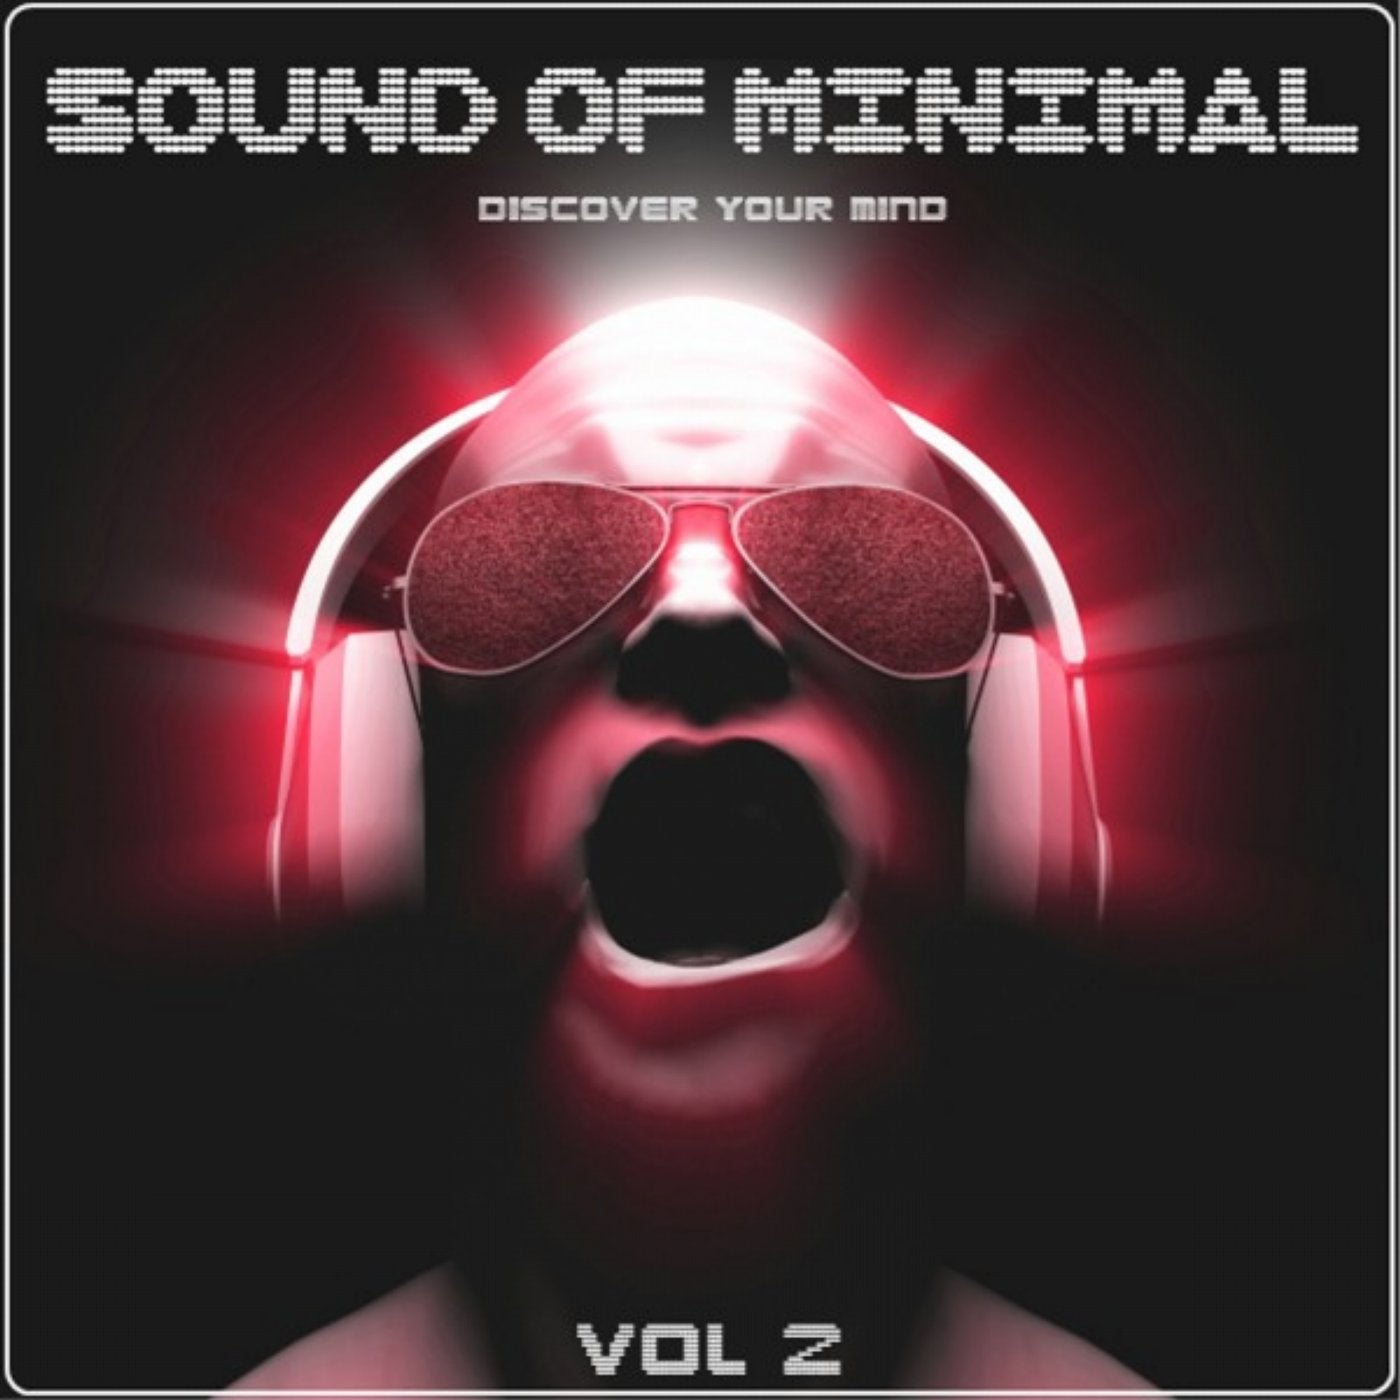 Sound of Minimal Vol. 2